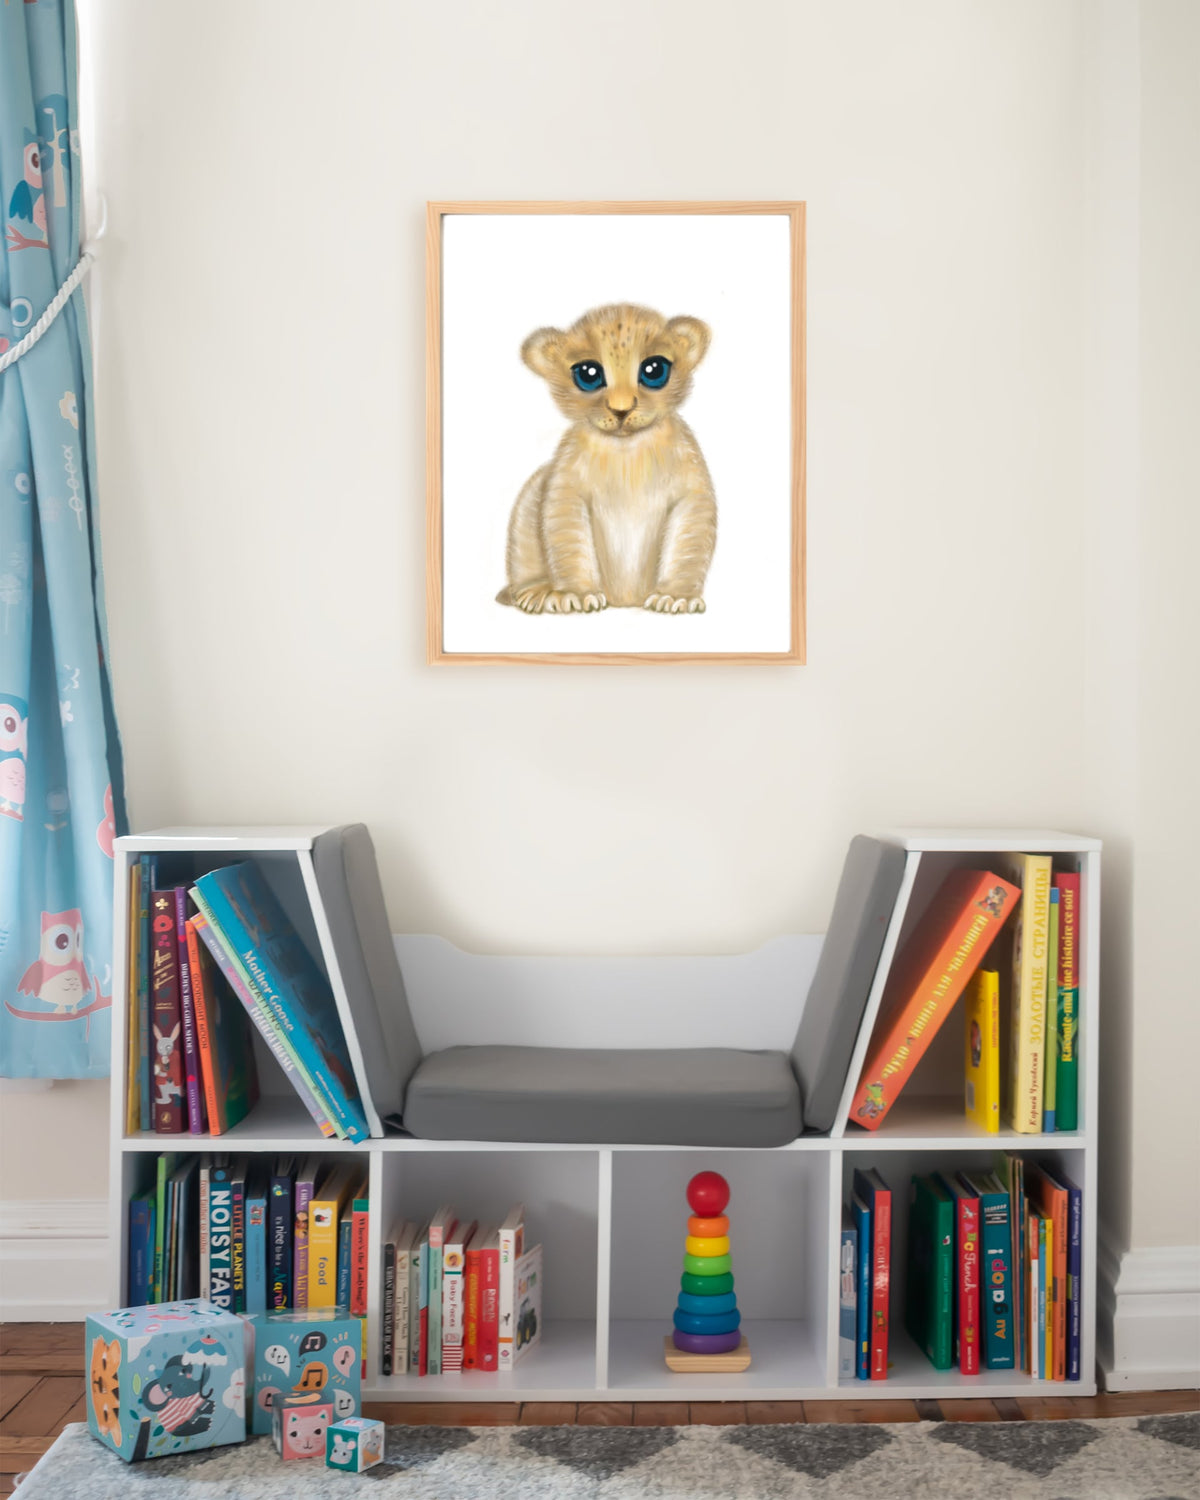 Framed example hand drawn nursery decor wall art poster cute lion cub baby animal 